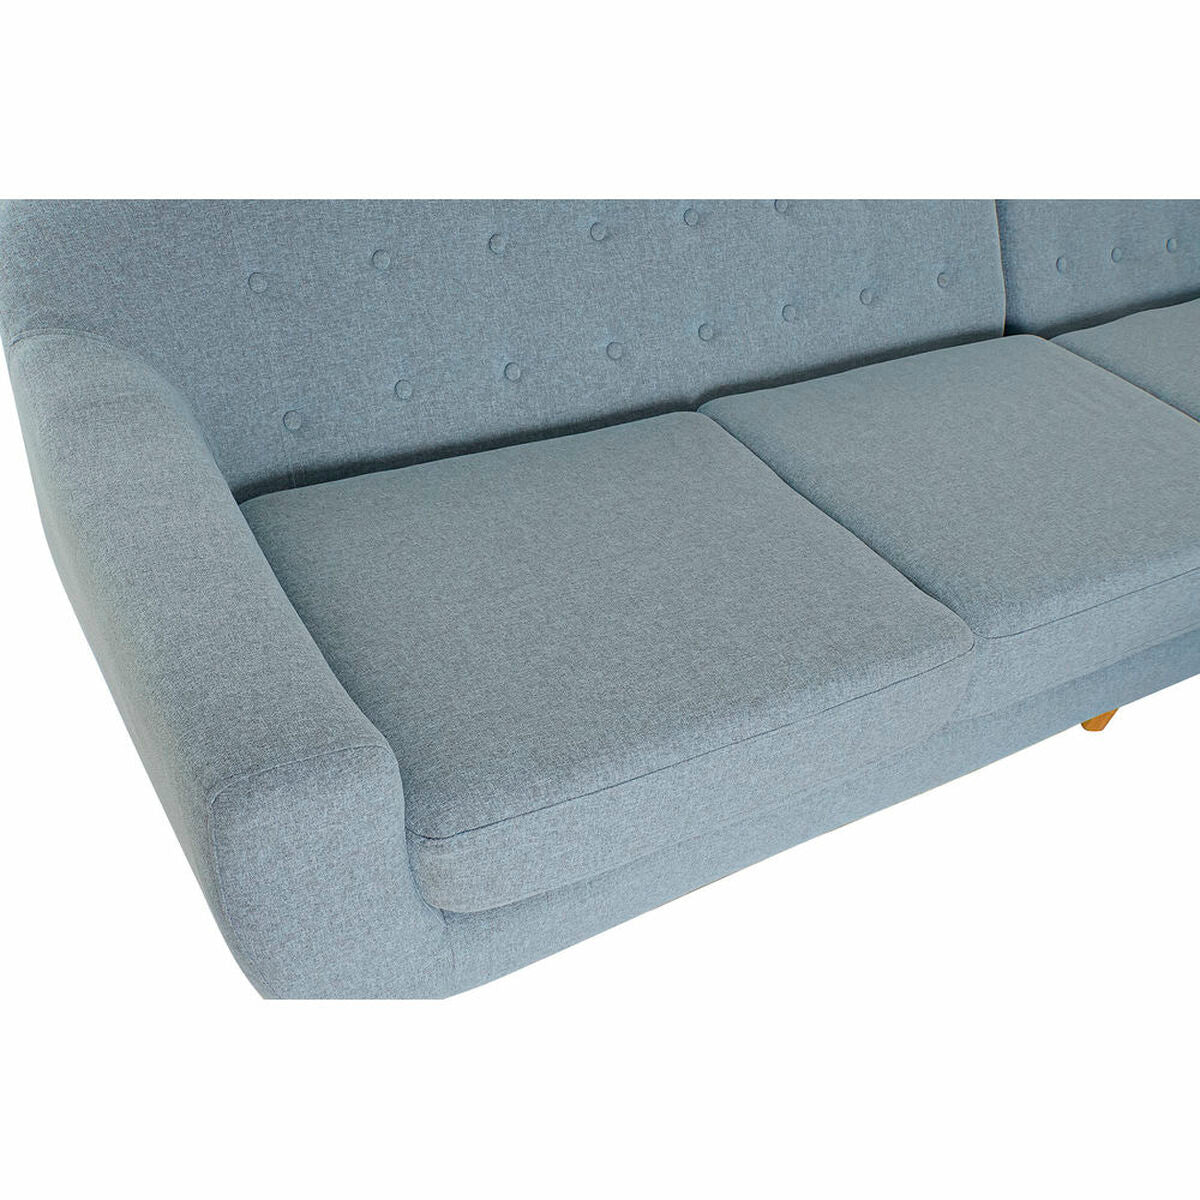 3-Seater Sofa DKD Home Decor 8424001799343 226 x 144 x 84 cm Scandi Rubber wood Sky blue